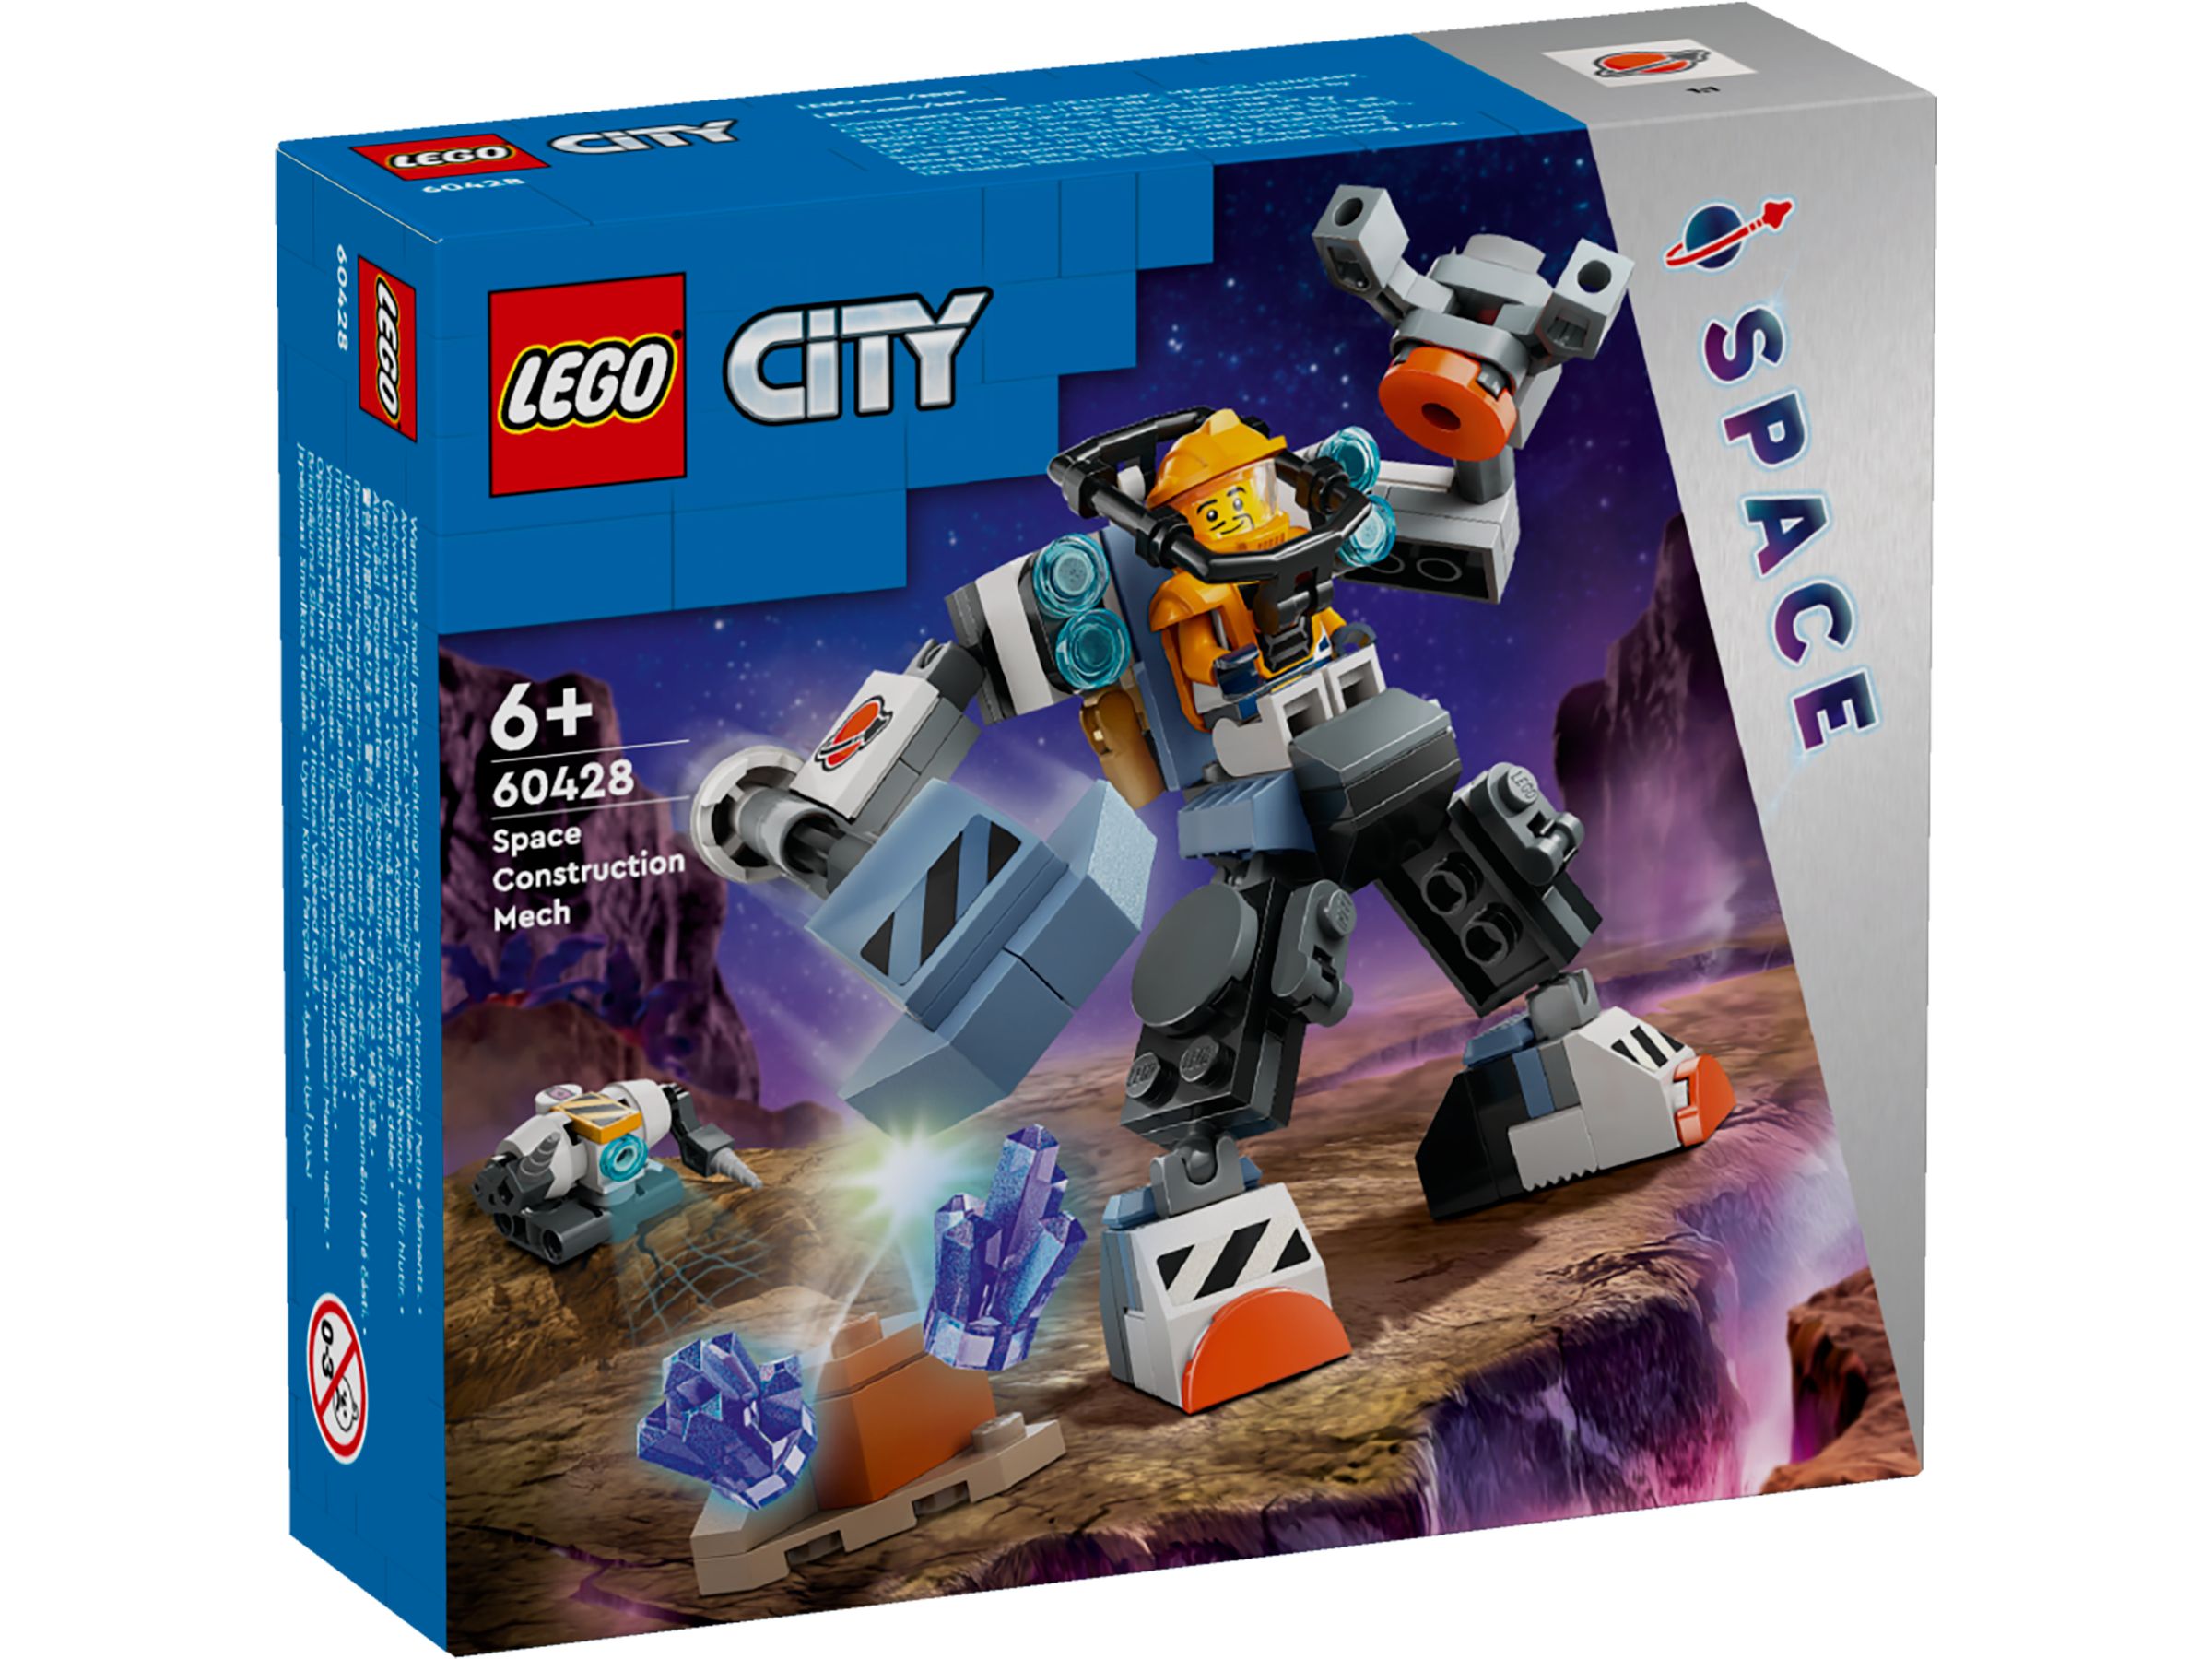 LEGO City 60428 Weltraum-Mech LEGO_60428_Box1_v29.jpg